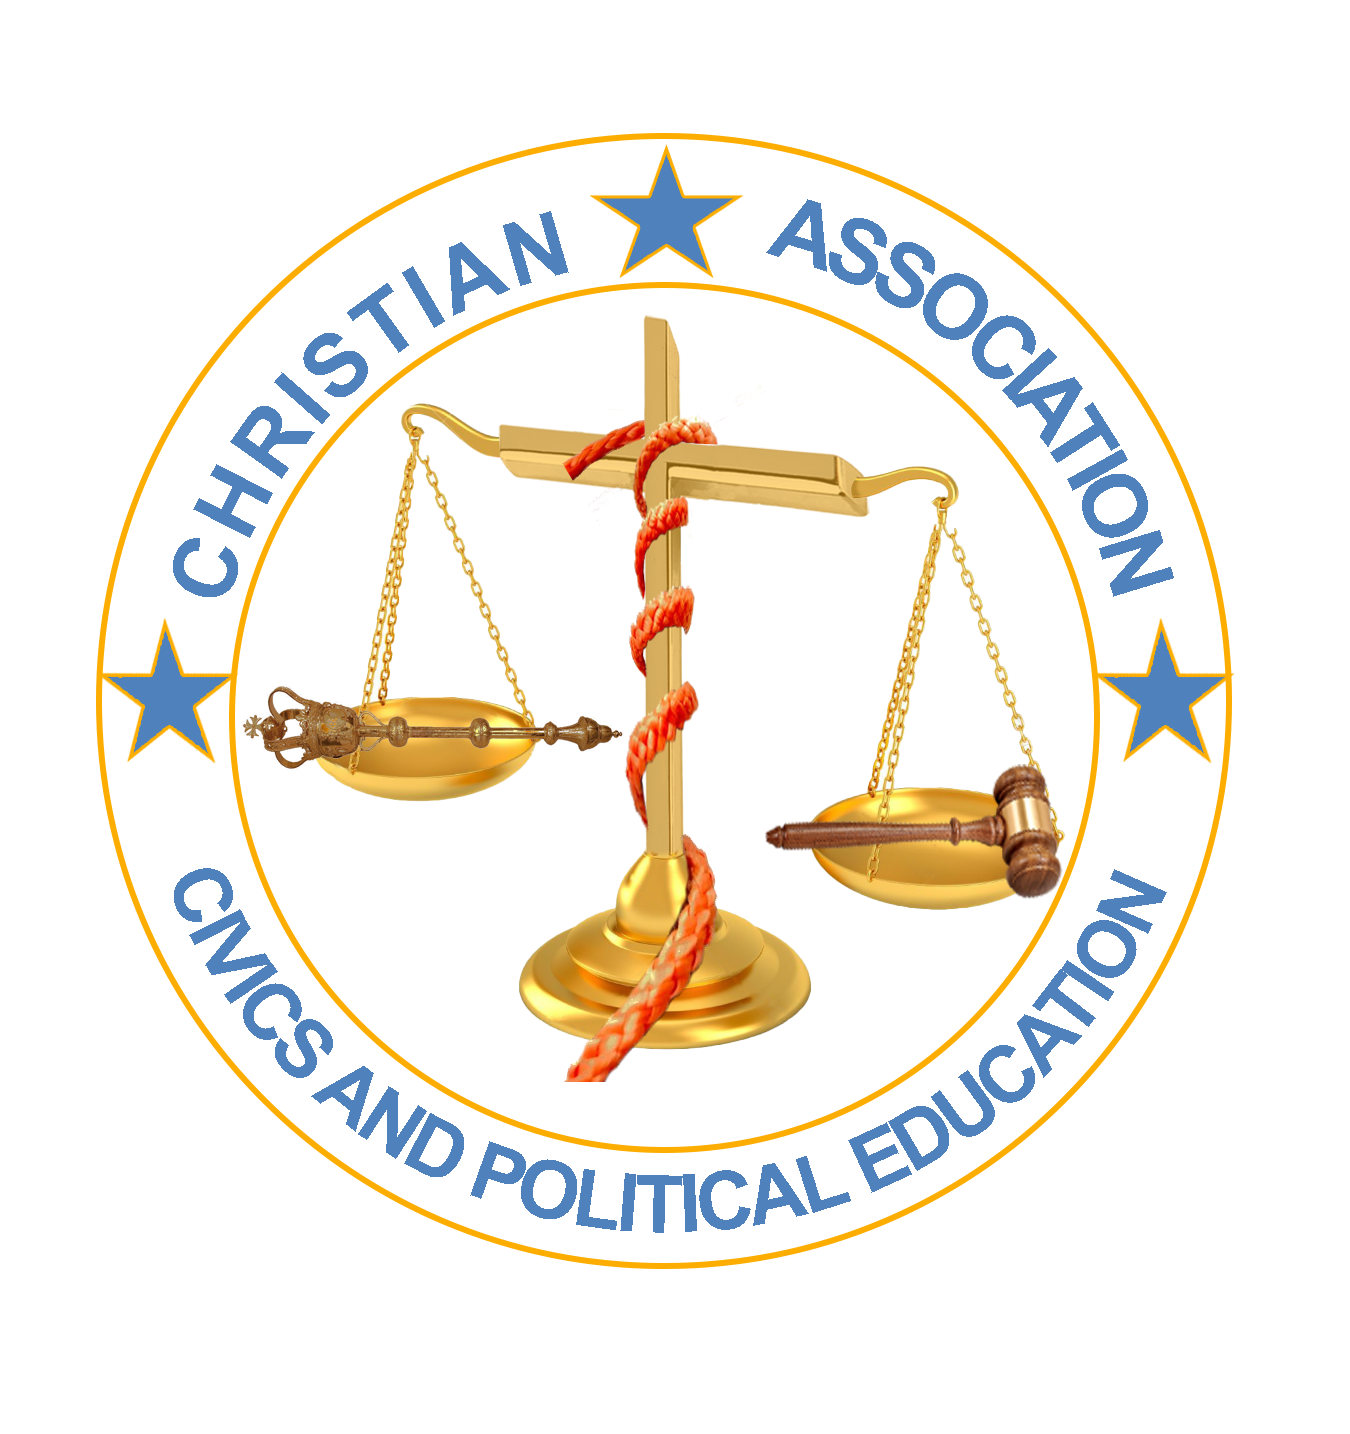 Christian Association for Civics